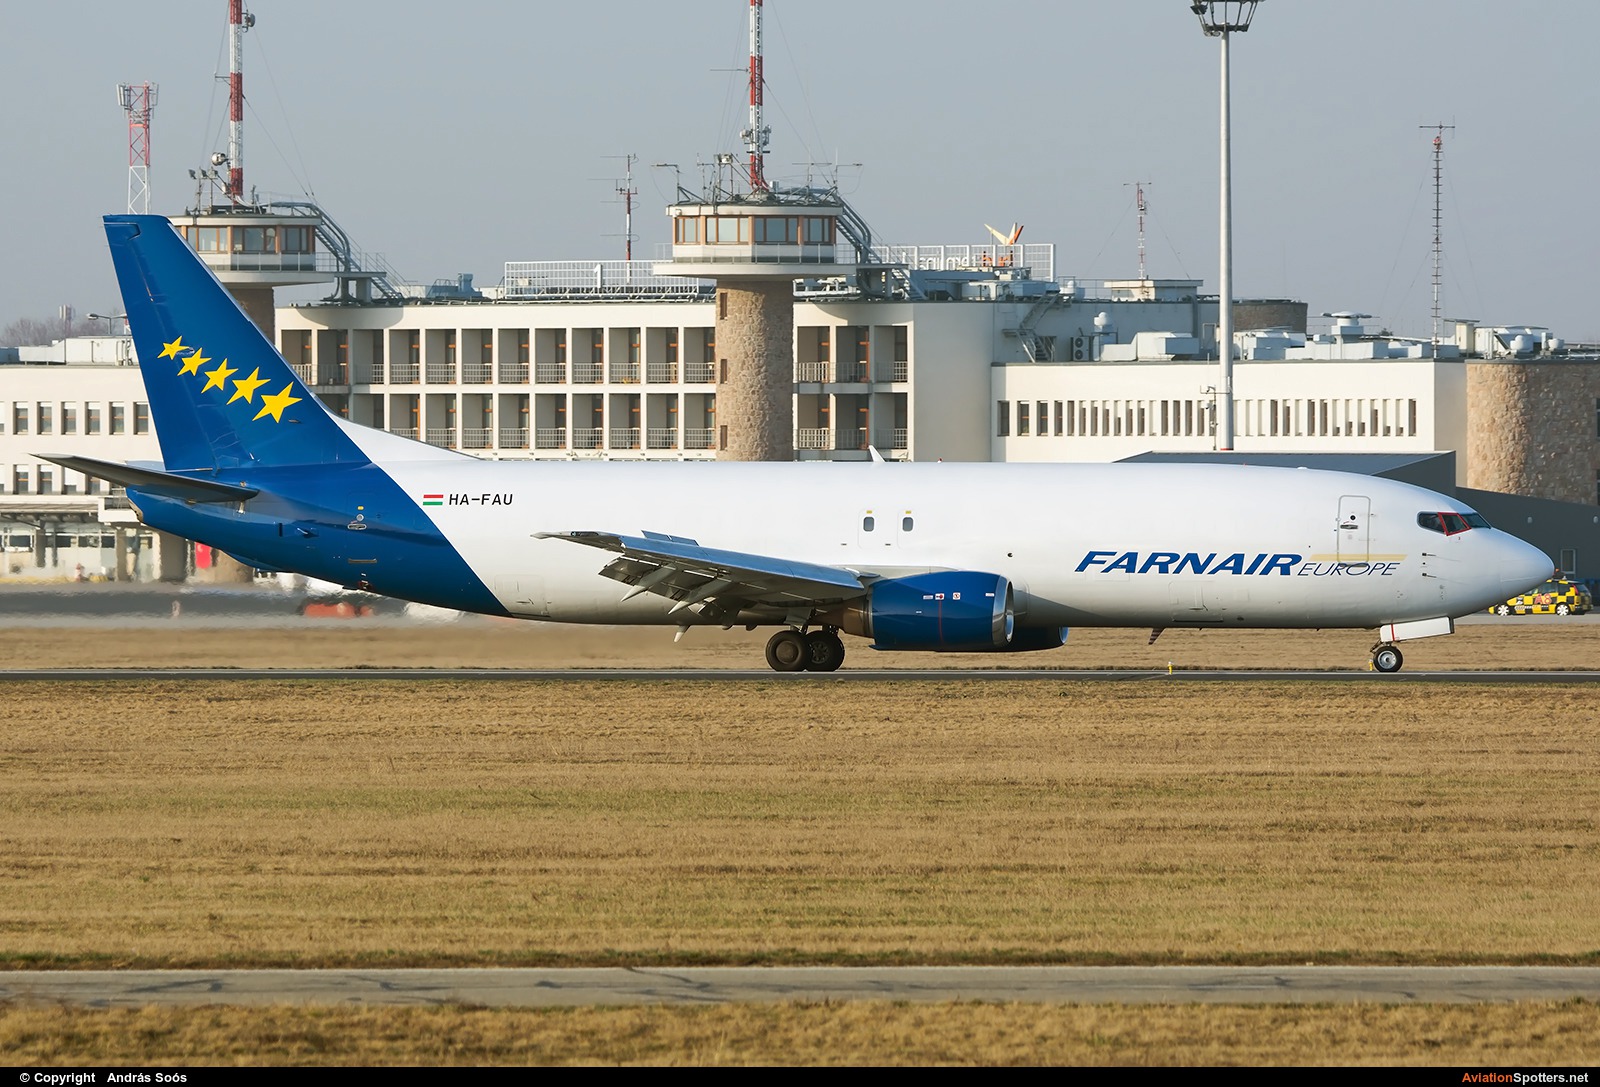 Farnair Europe  -  737-400F  (HA-FAU) By András Soós (sas1965)